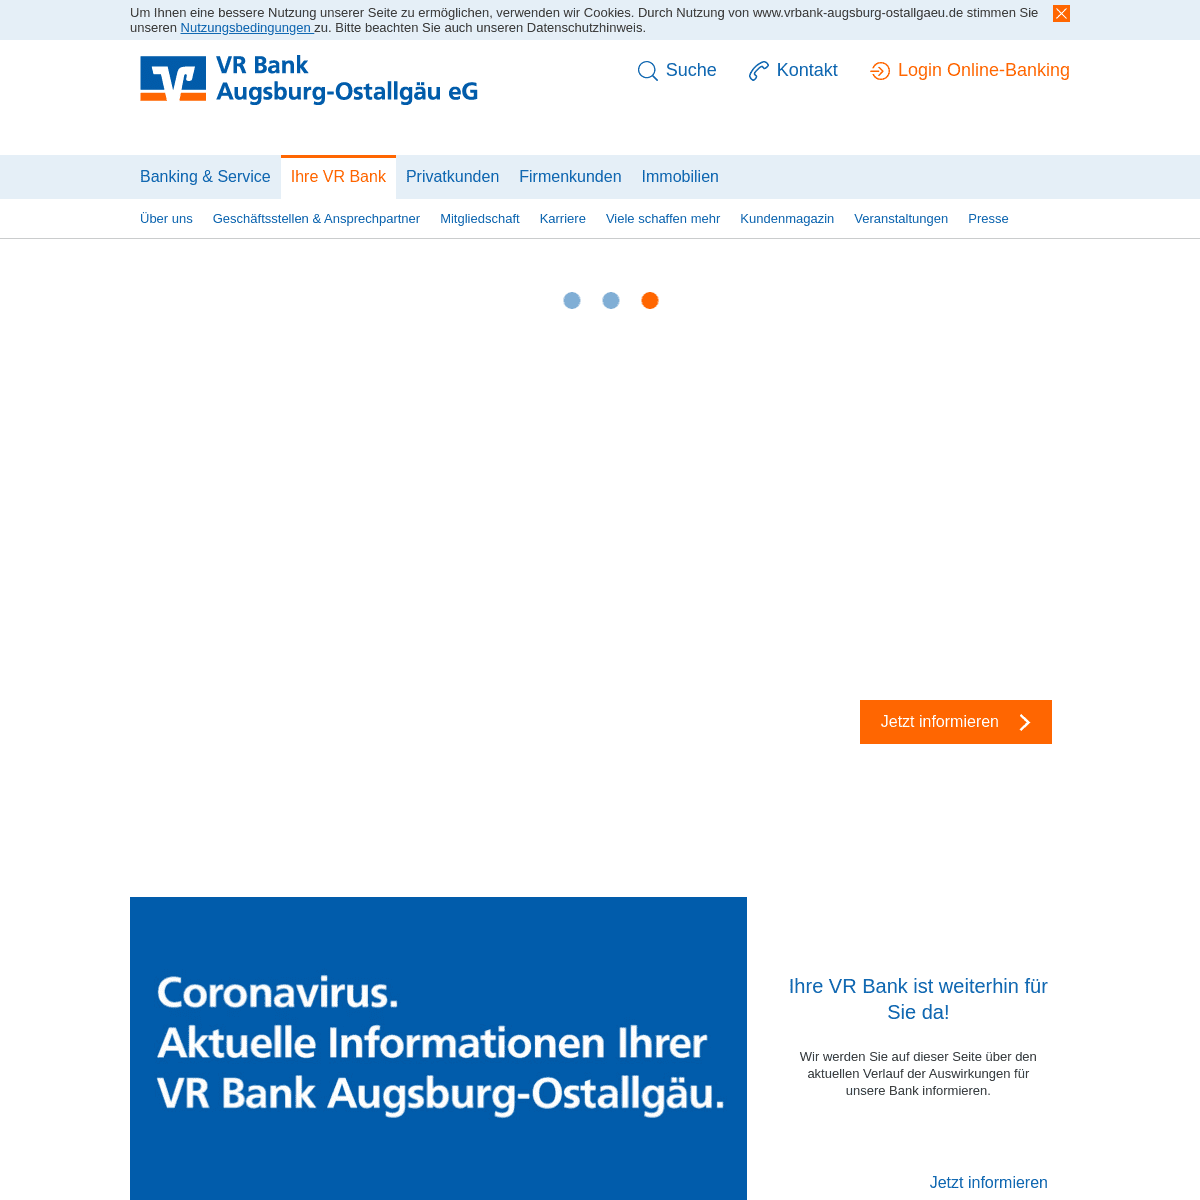 A complete backup of augusta-bank.de